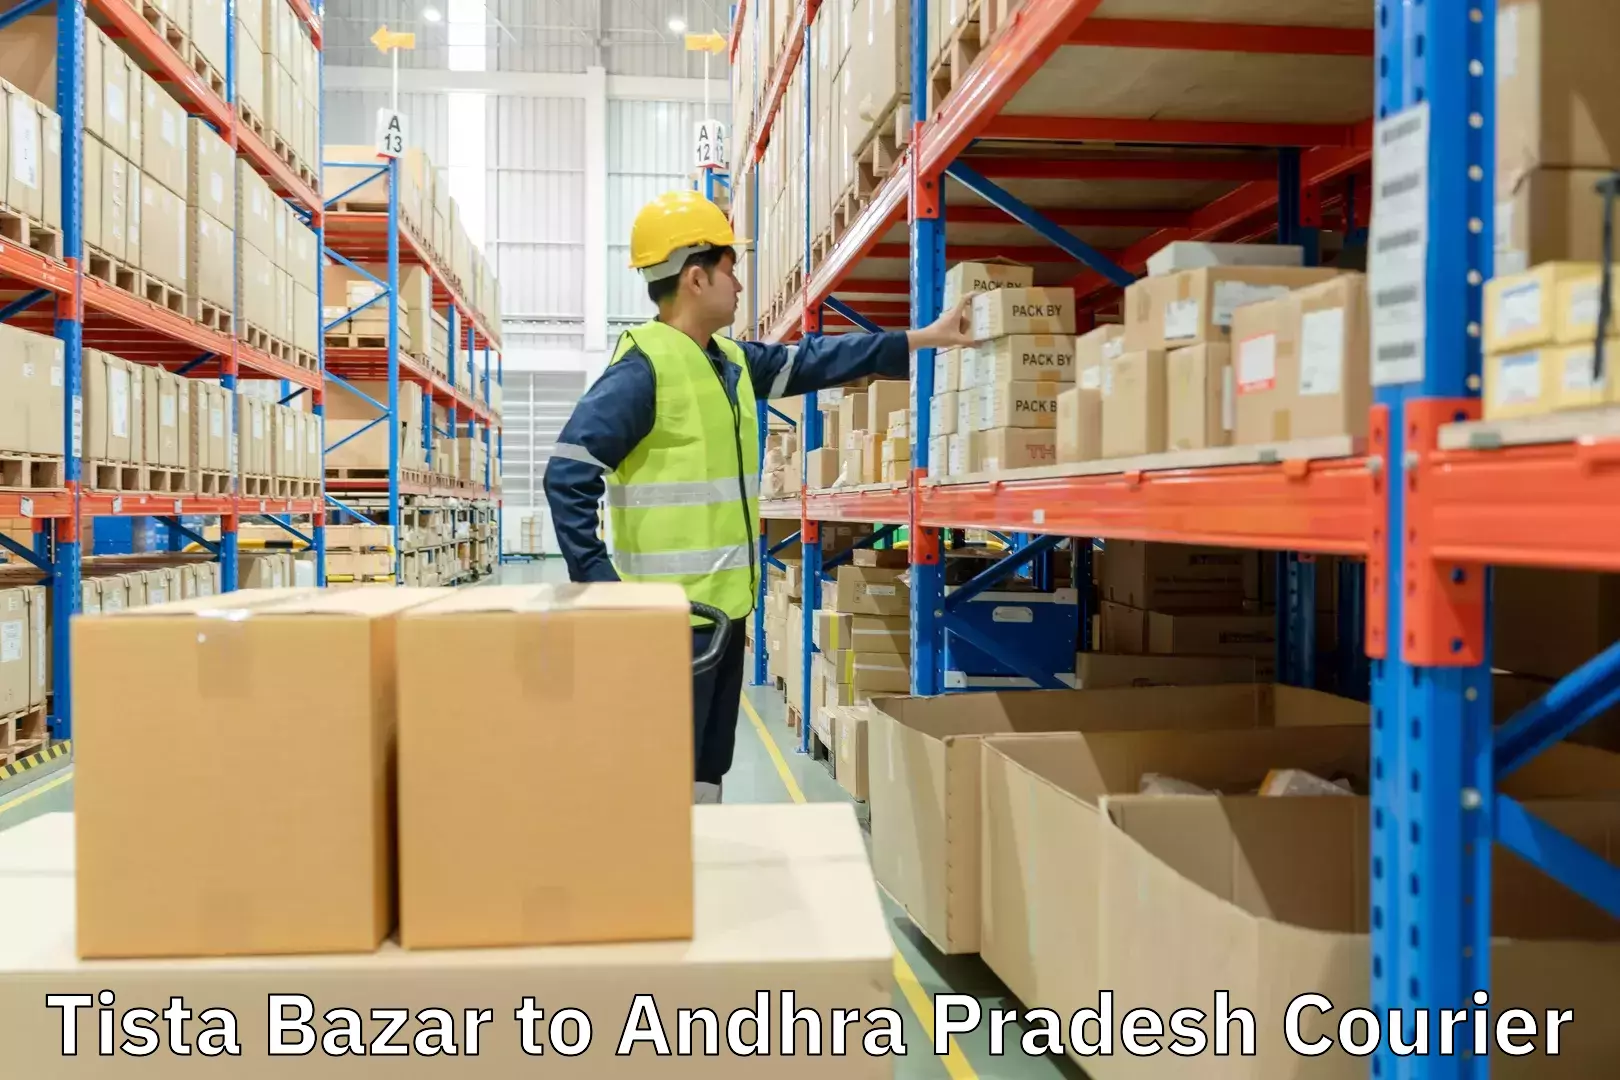 Express delivery network Tista Bazar to Andhra Pradesh